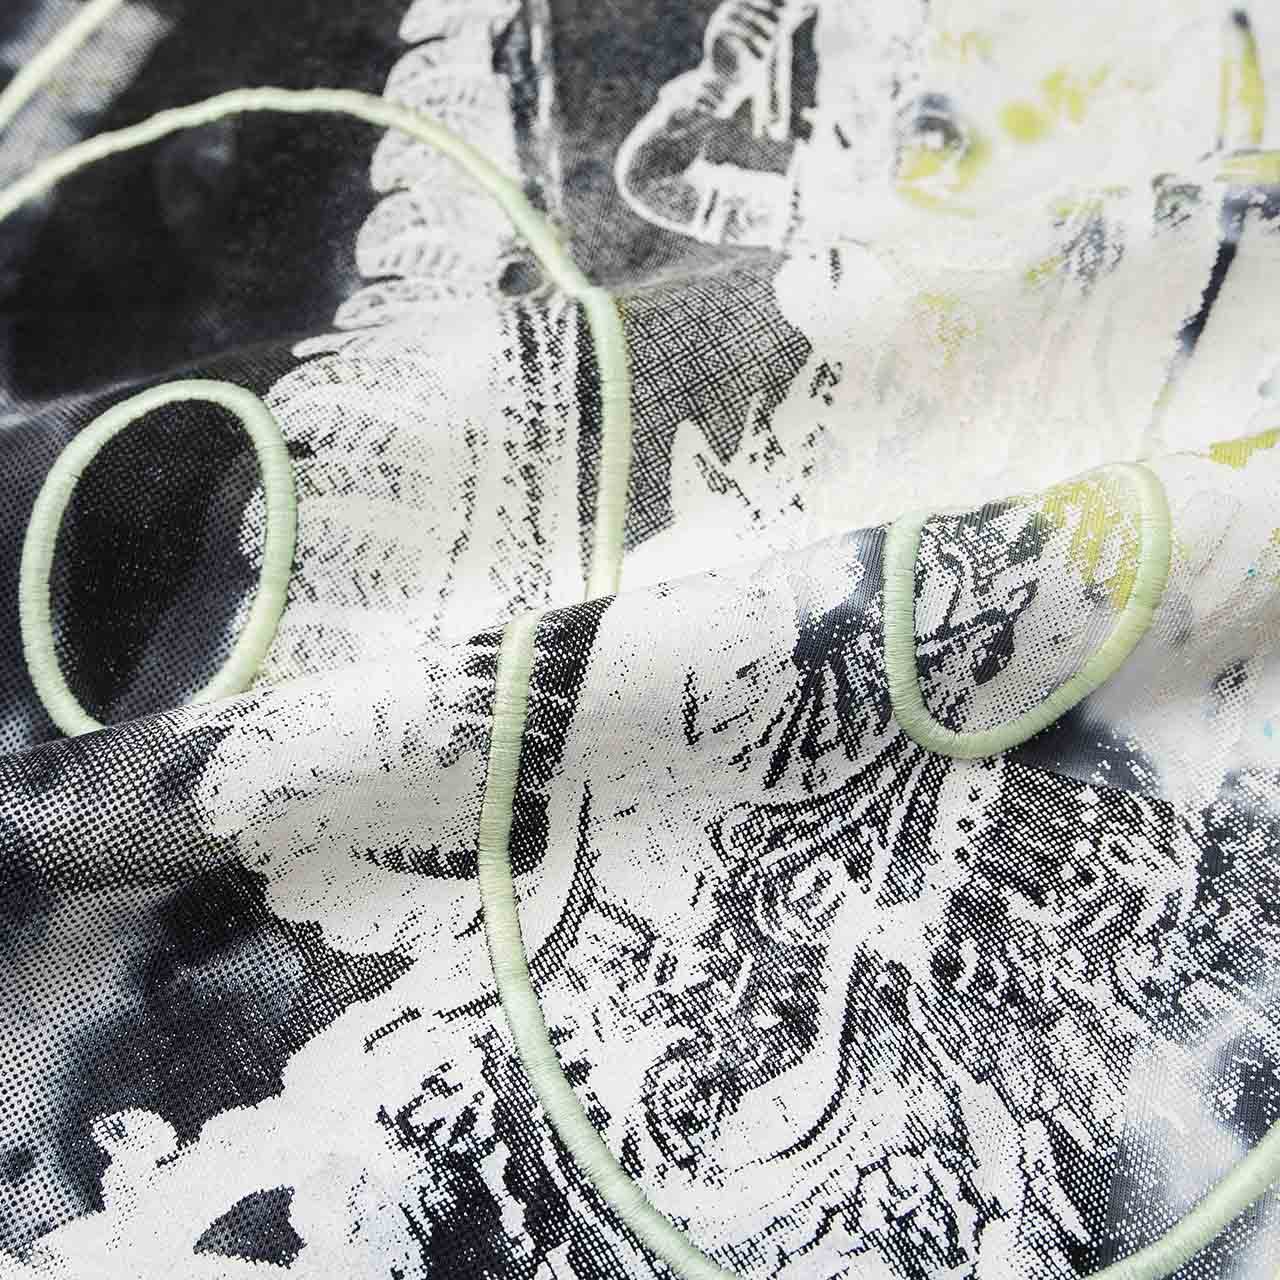 perks and mini haze filter tie dye oversized s/s t-shirt (multi) - 1392-swtd-2 - a.plus - Image - 5